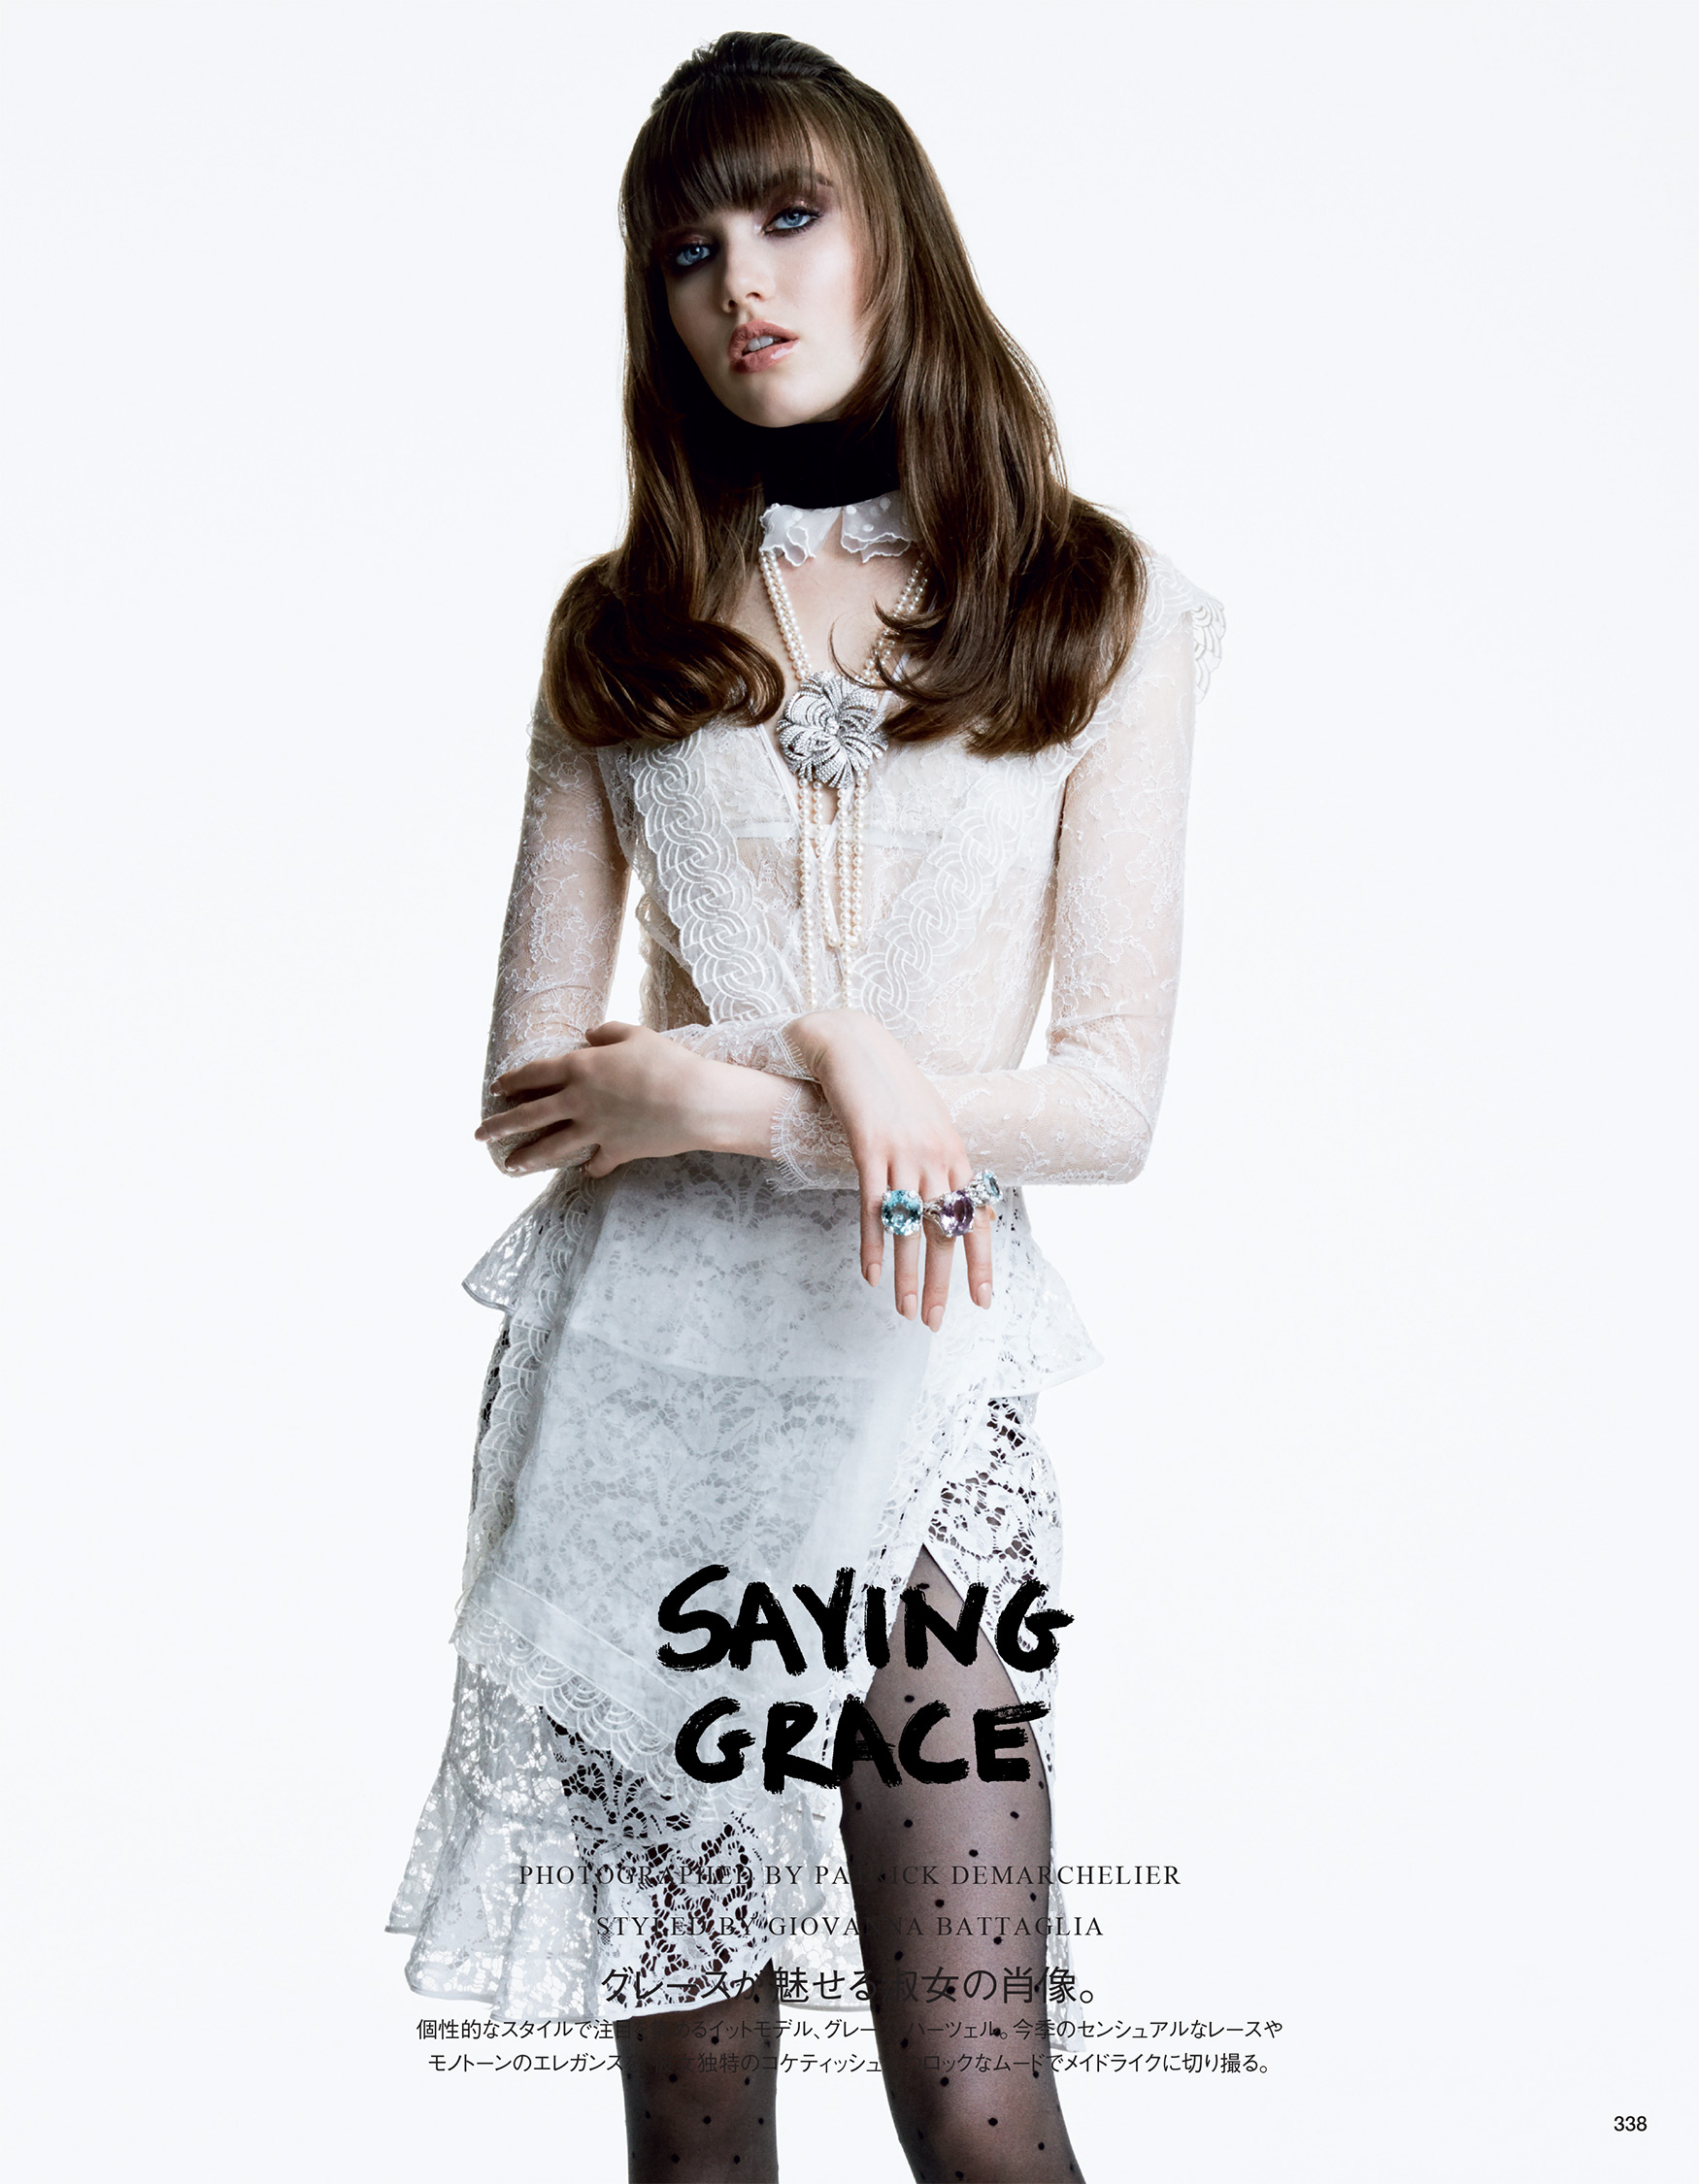 Giovanna-Battaglia-Vogue-Japan-October-2015-Patrick-Demarchelier-1.jpg